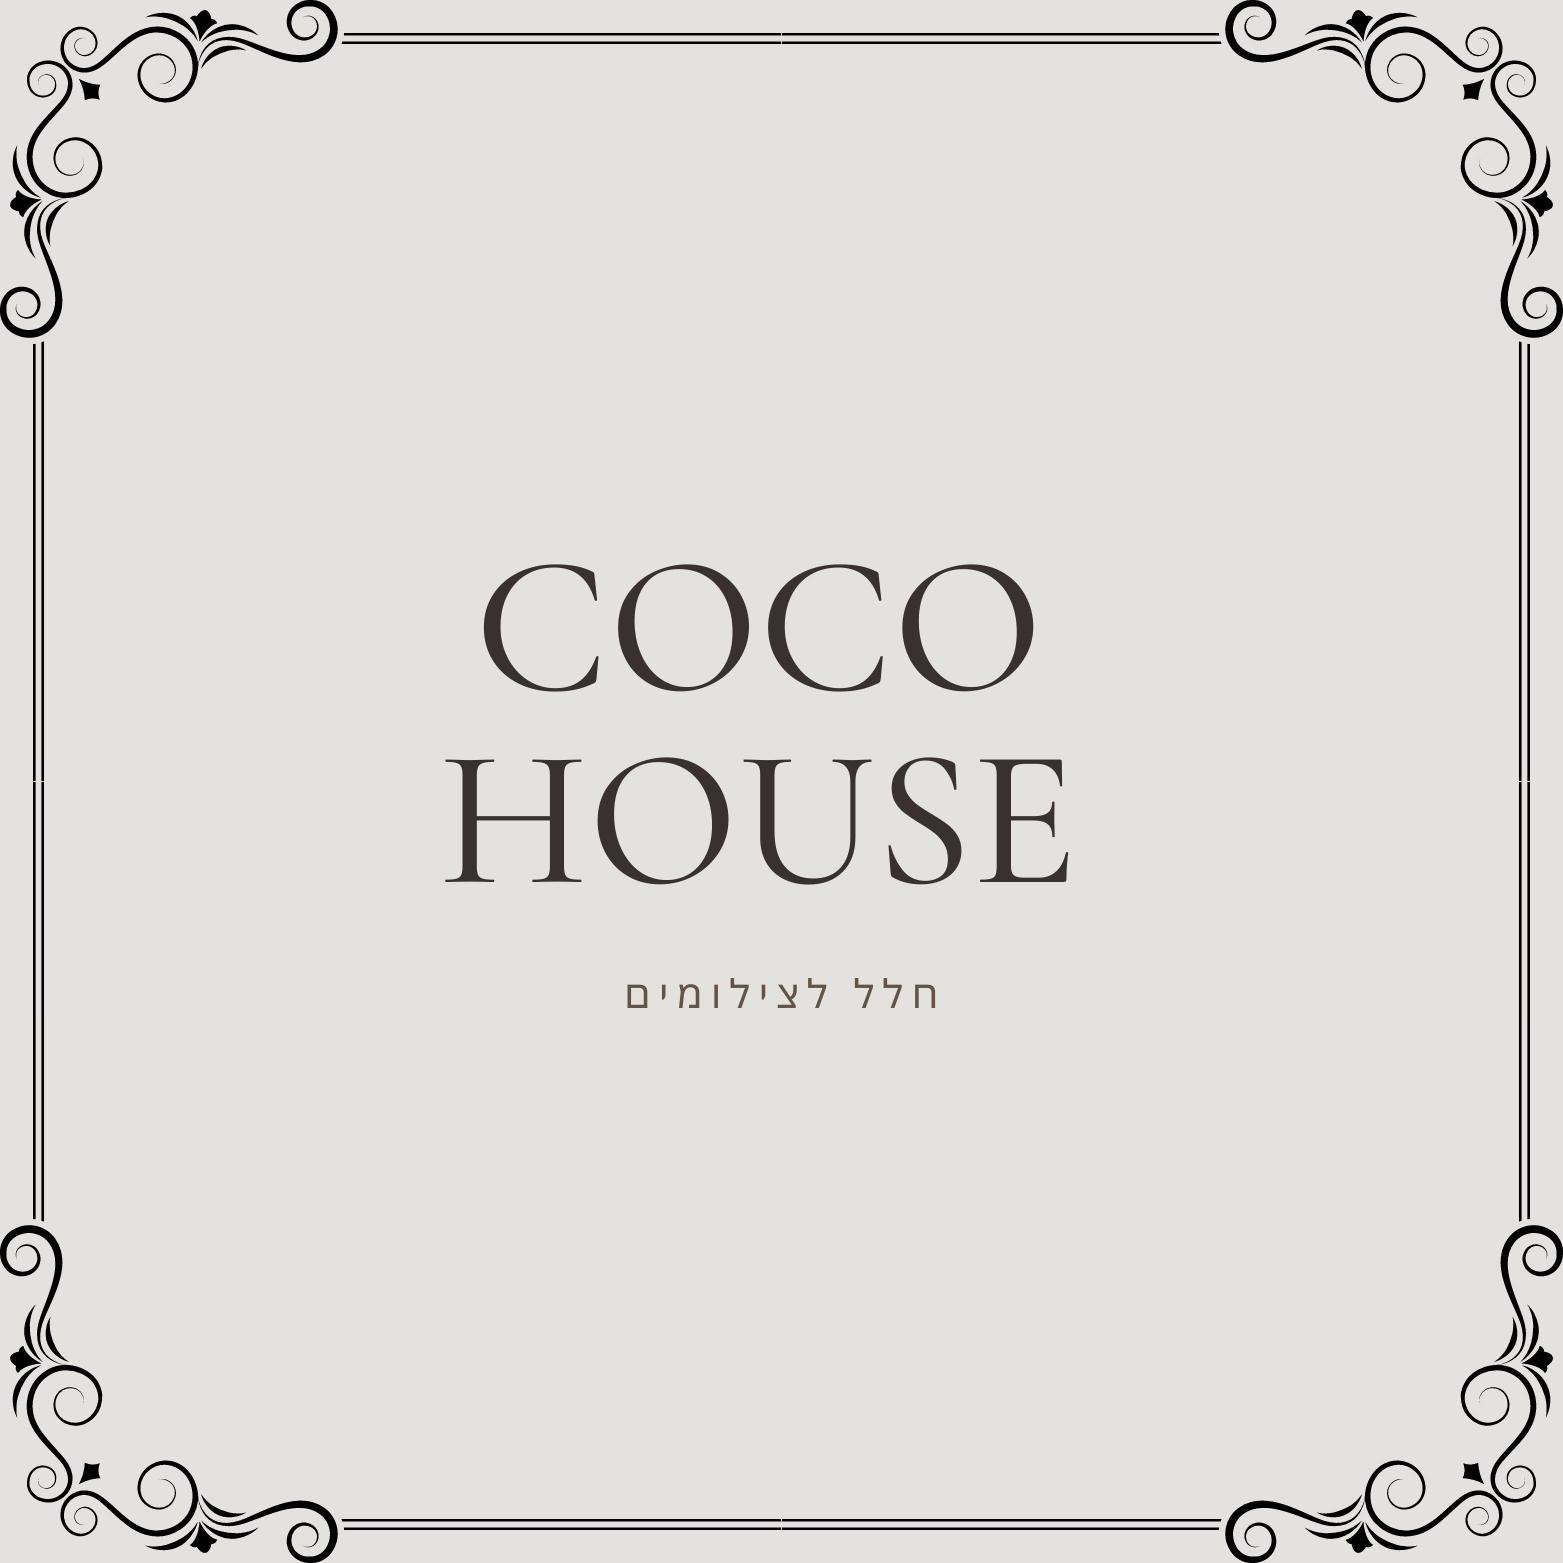 COCO HOUSE